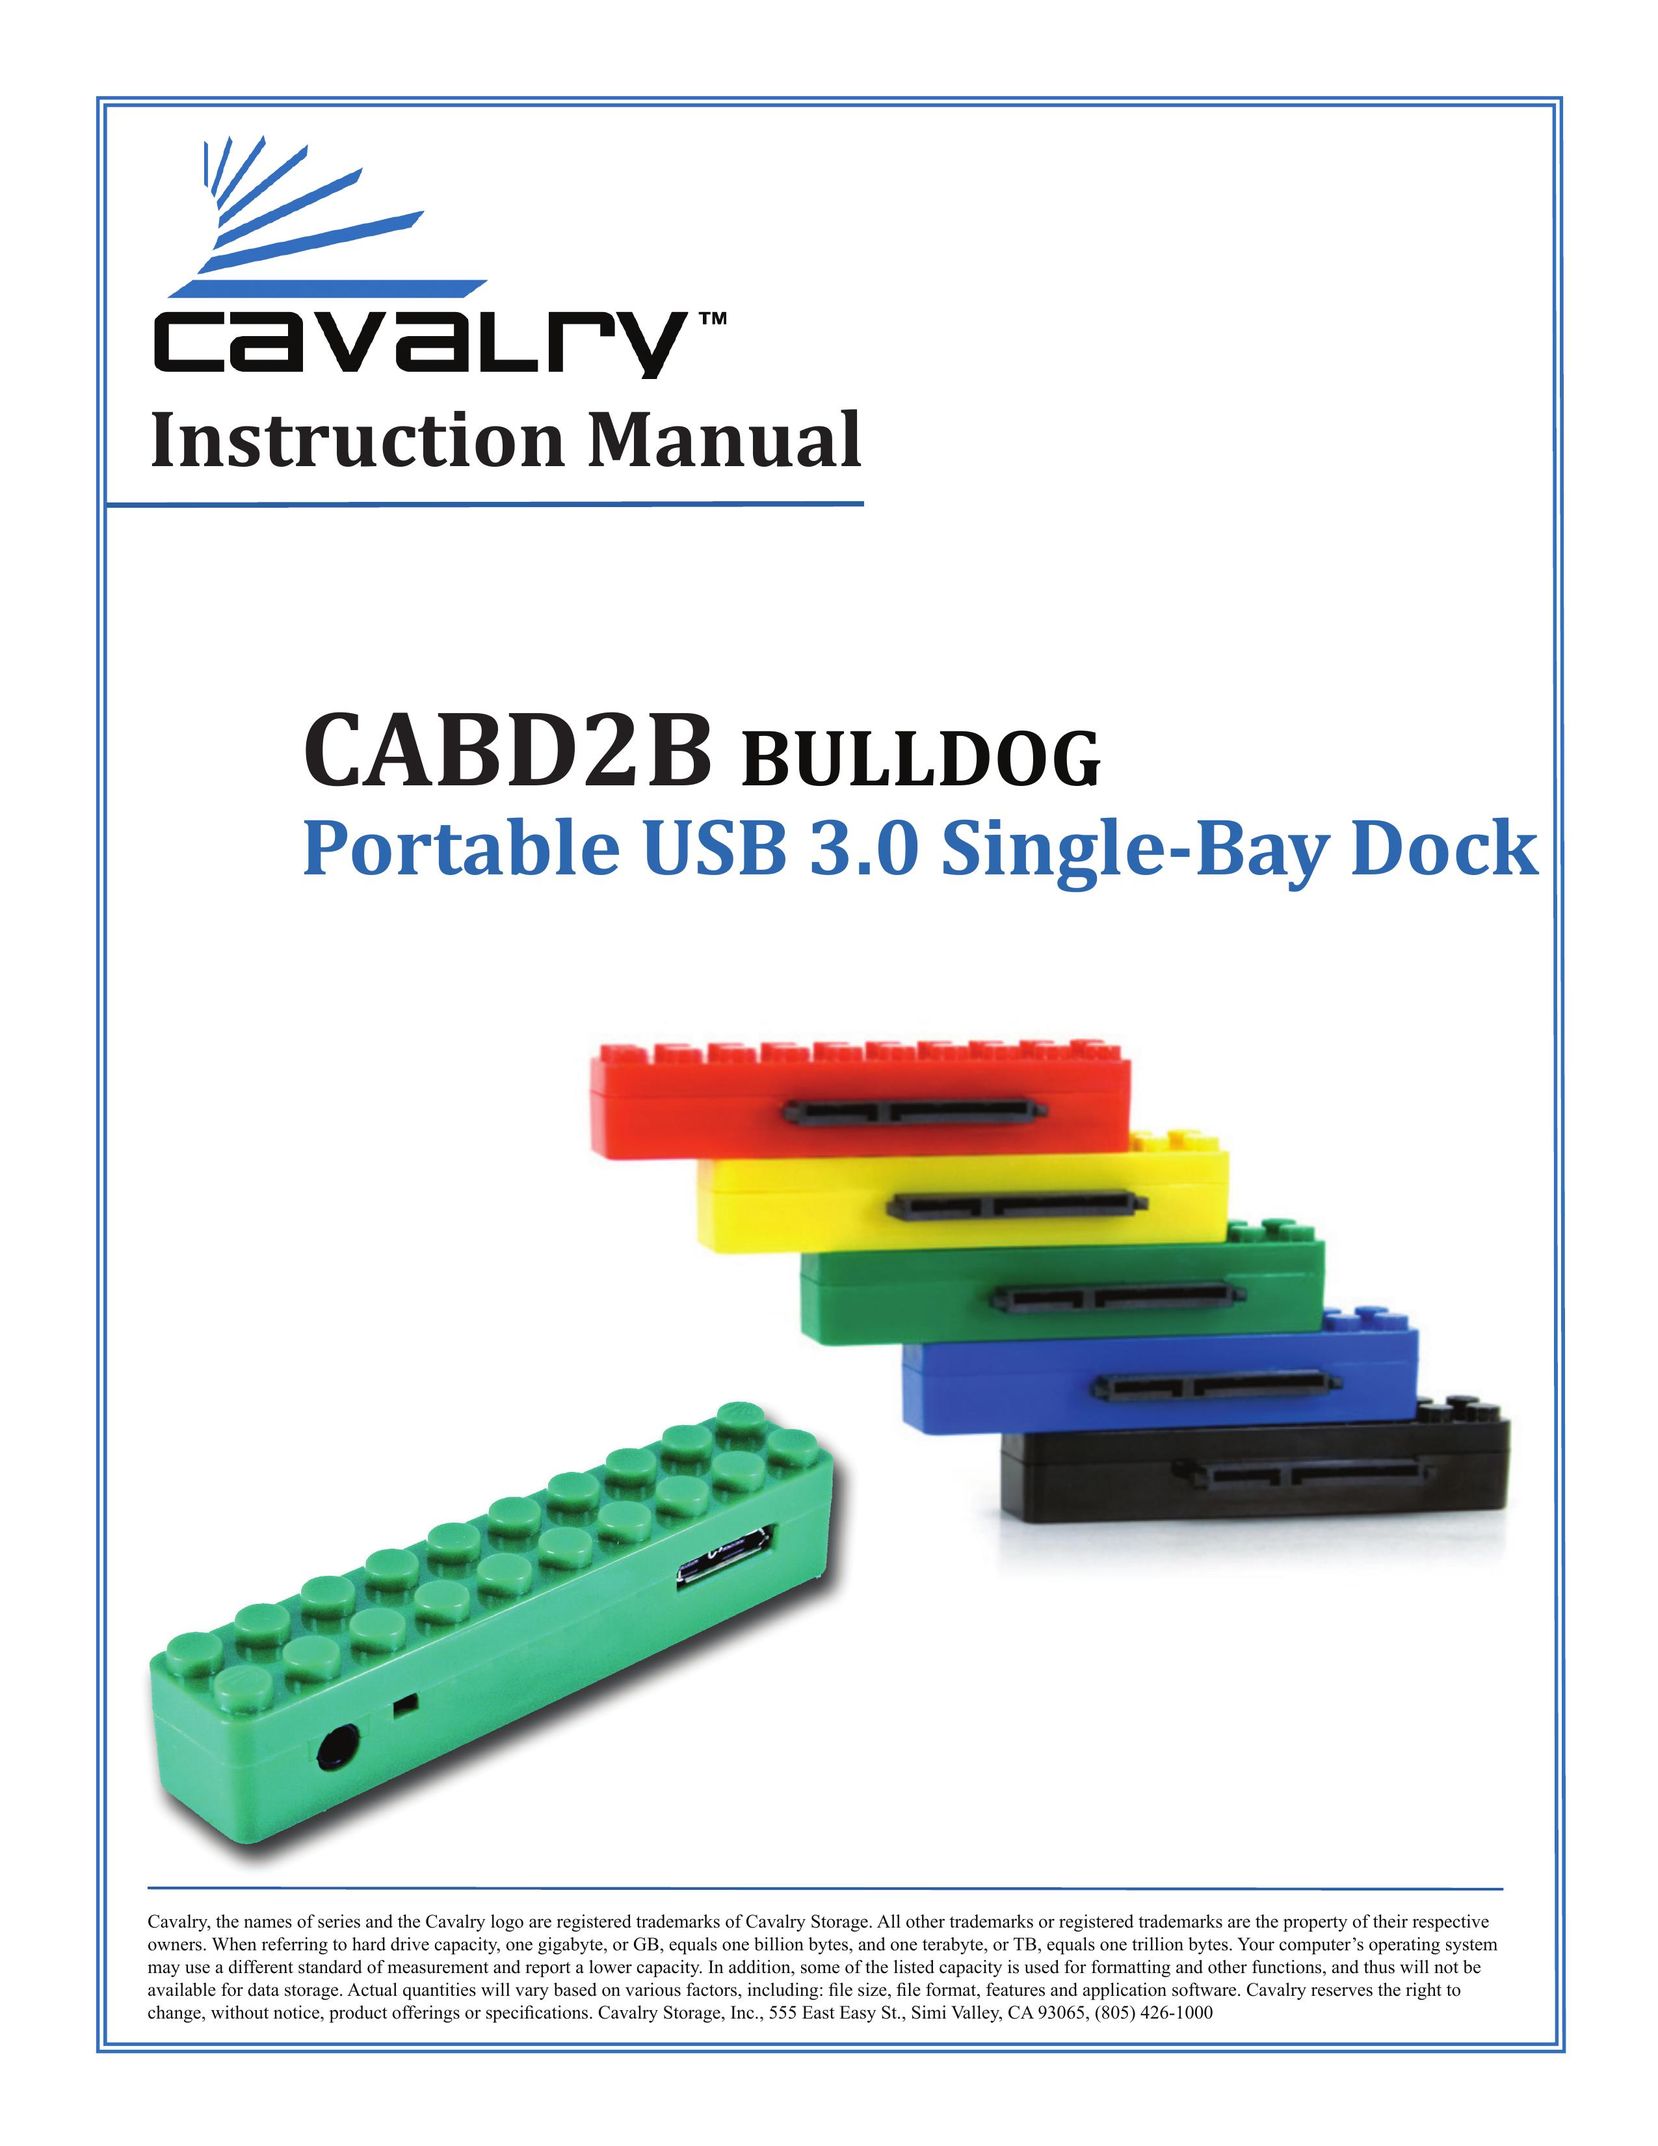 Cavalry Storage CABD2B Dishwasher User Manual (Page 1)